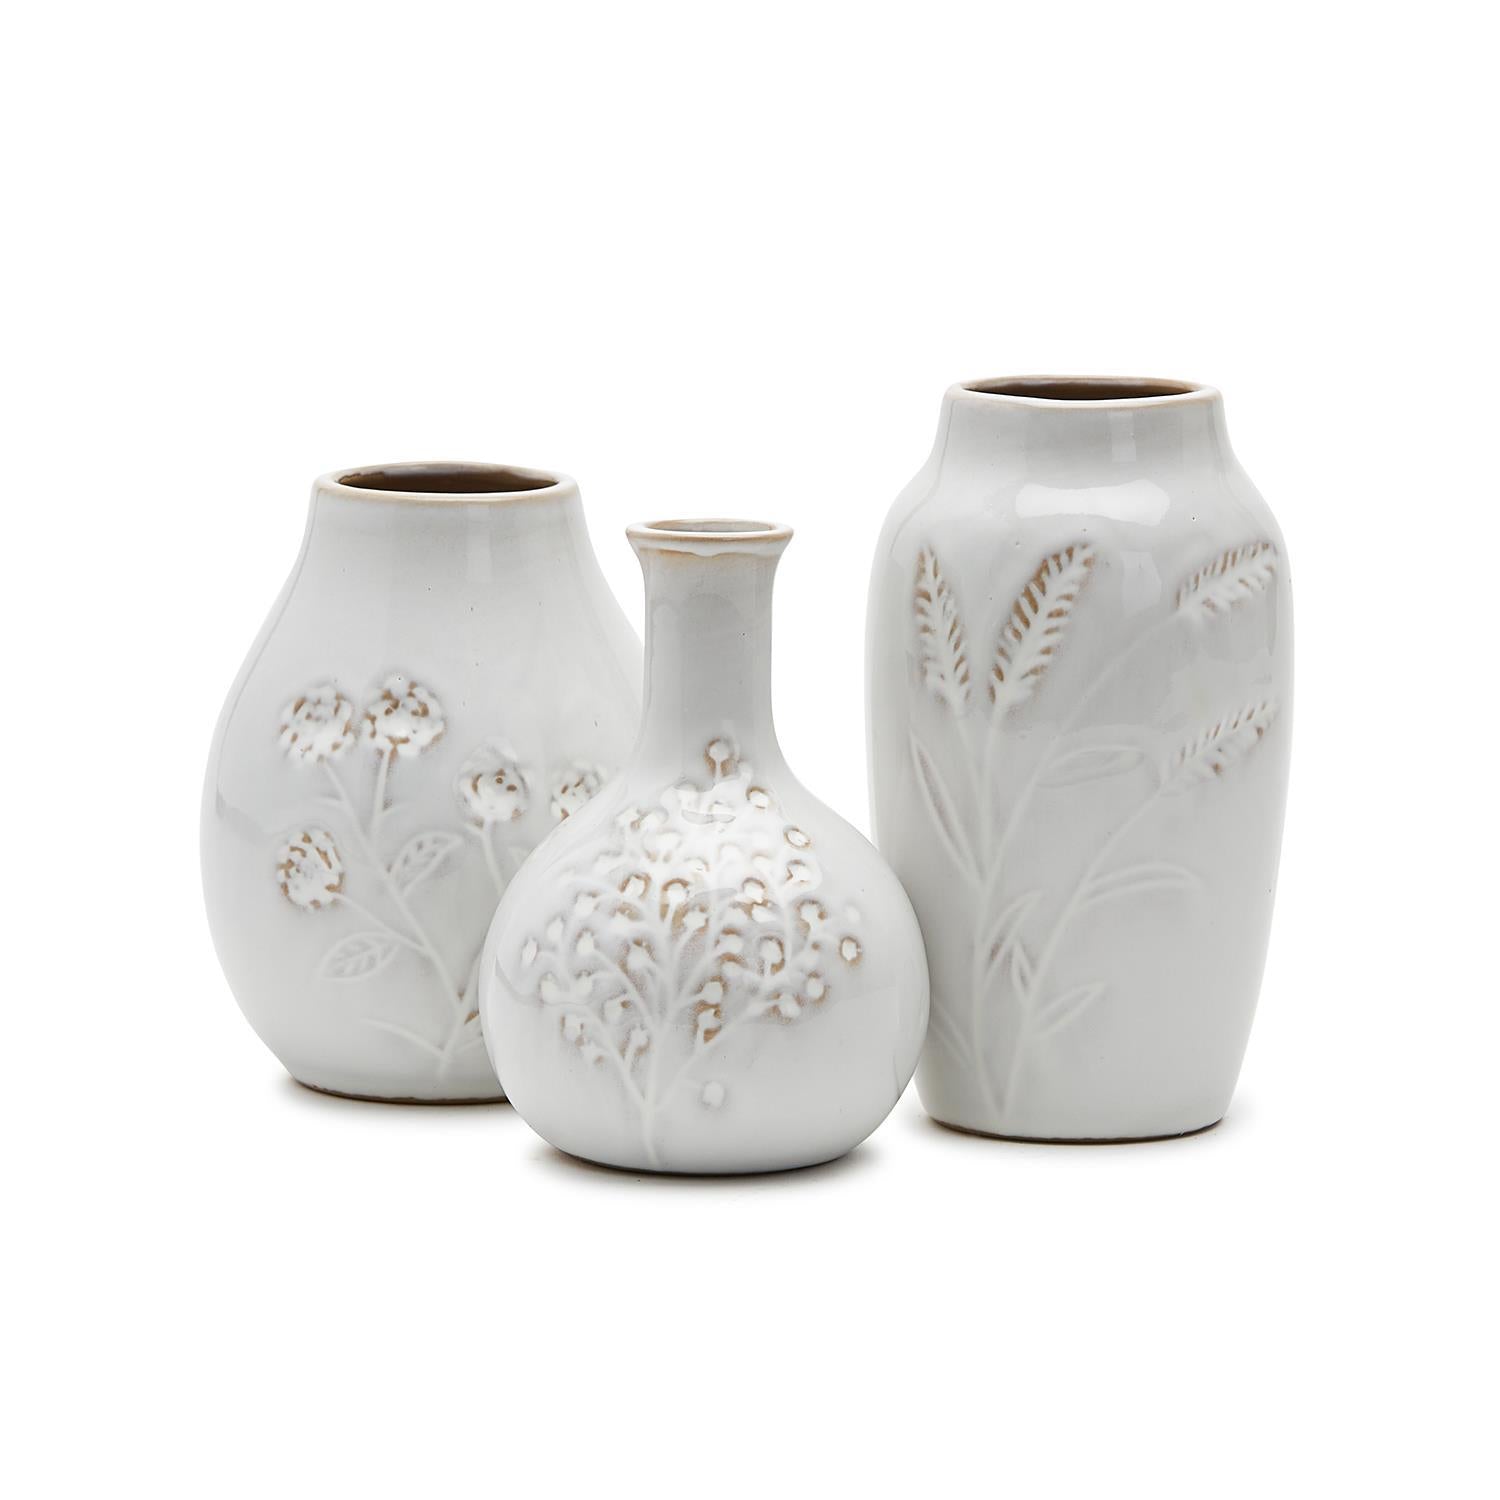 Floral Imprint Hand Crafted Ceramic Vase